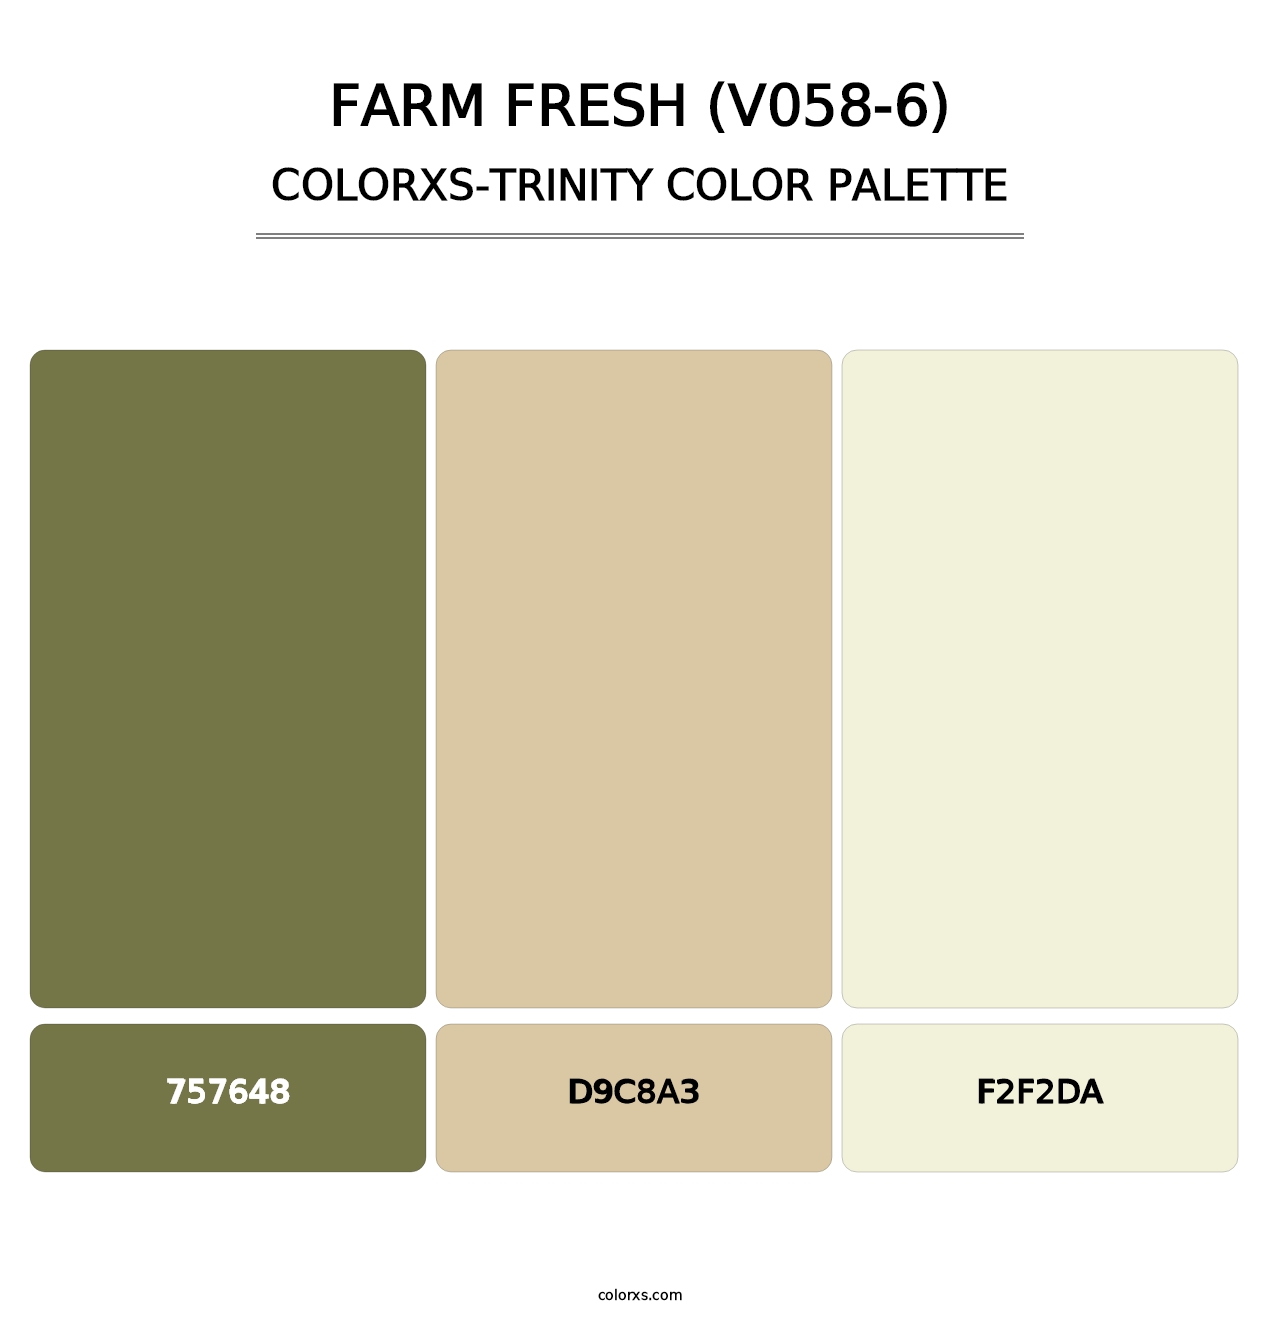 Farm Fresh (V058-6) - Colorxs Trinity Palette